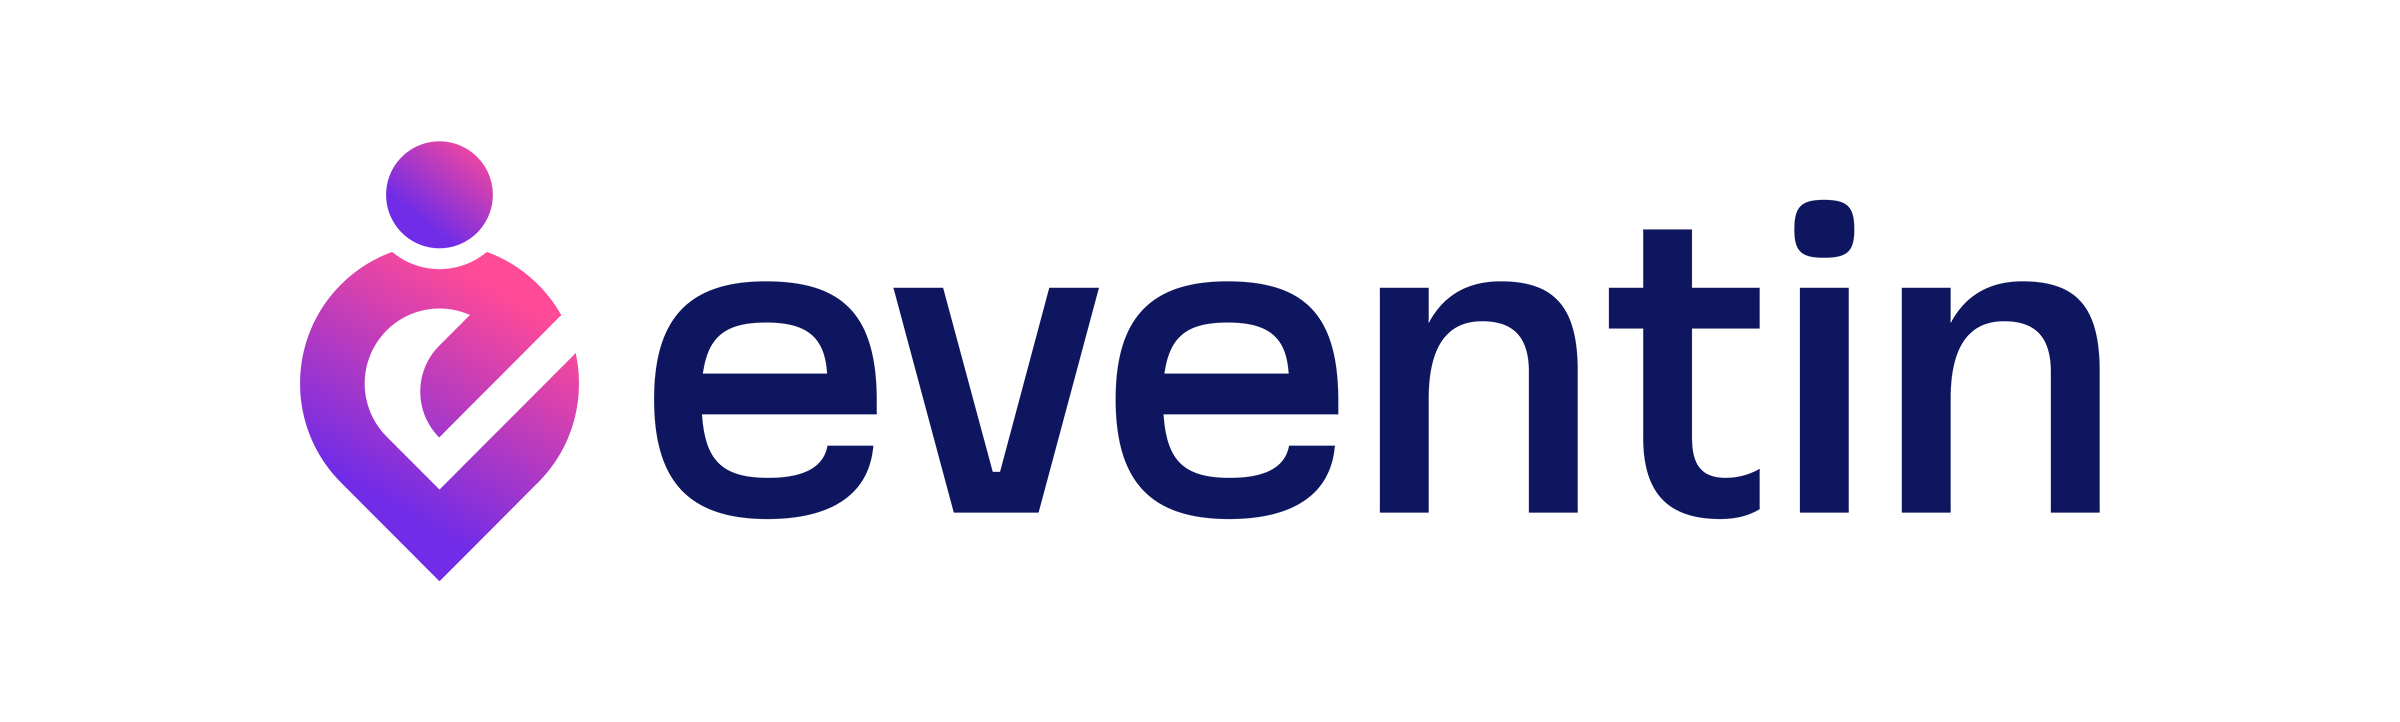 Eventin logo-1